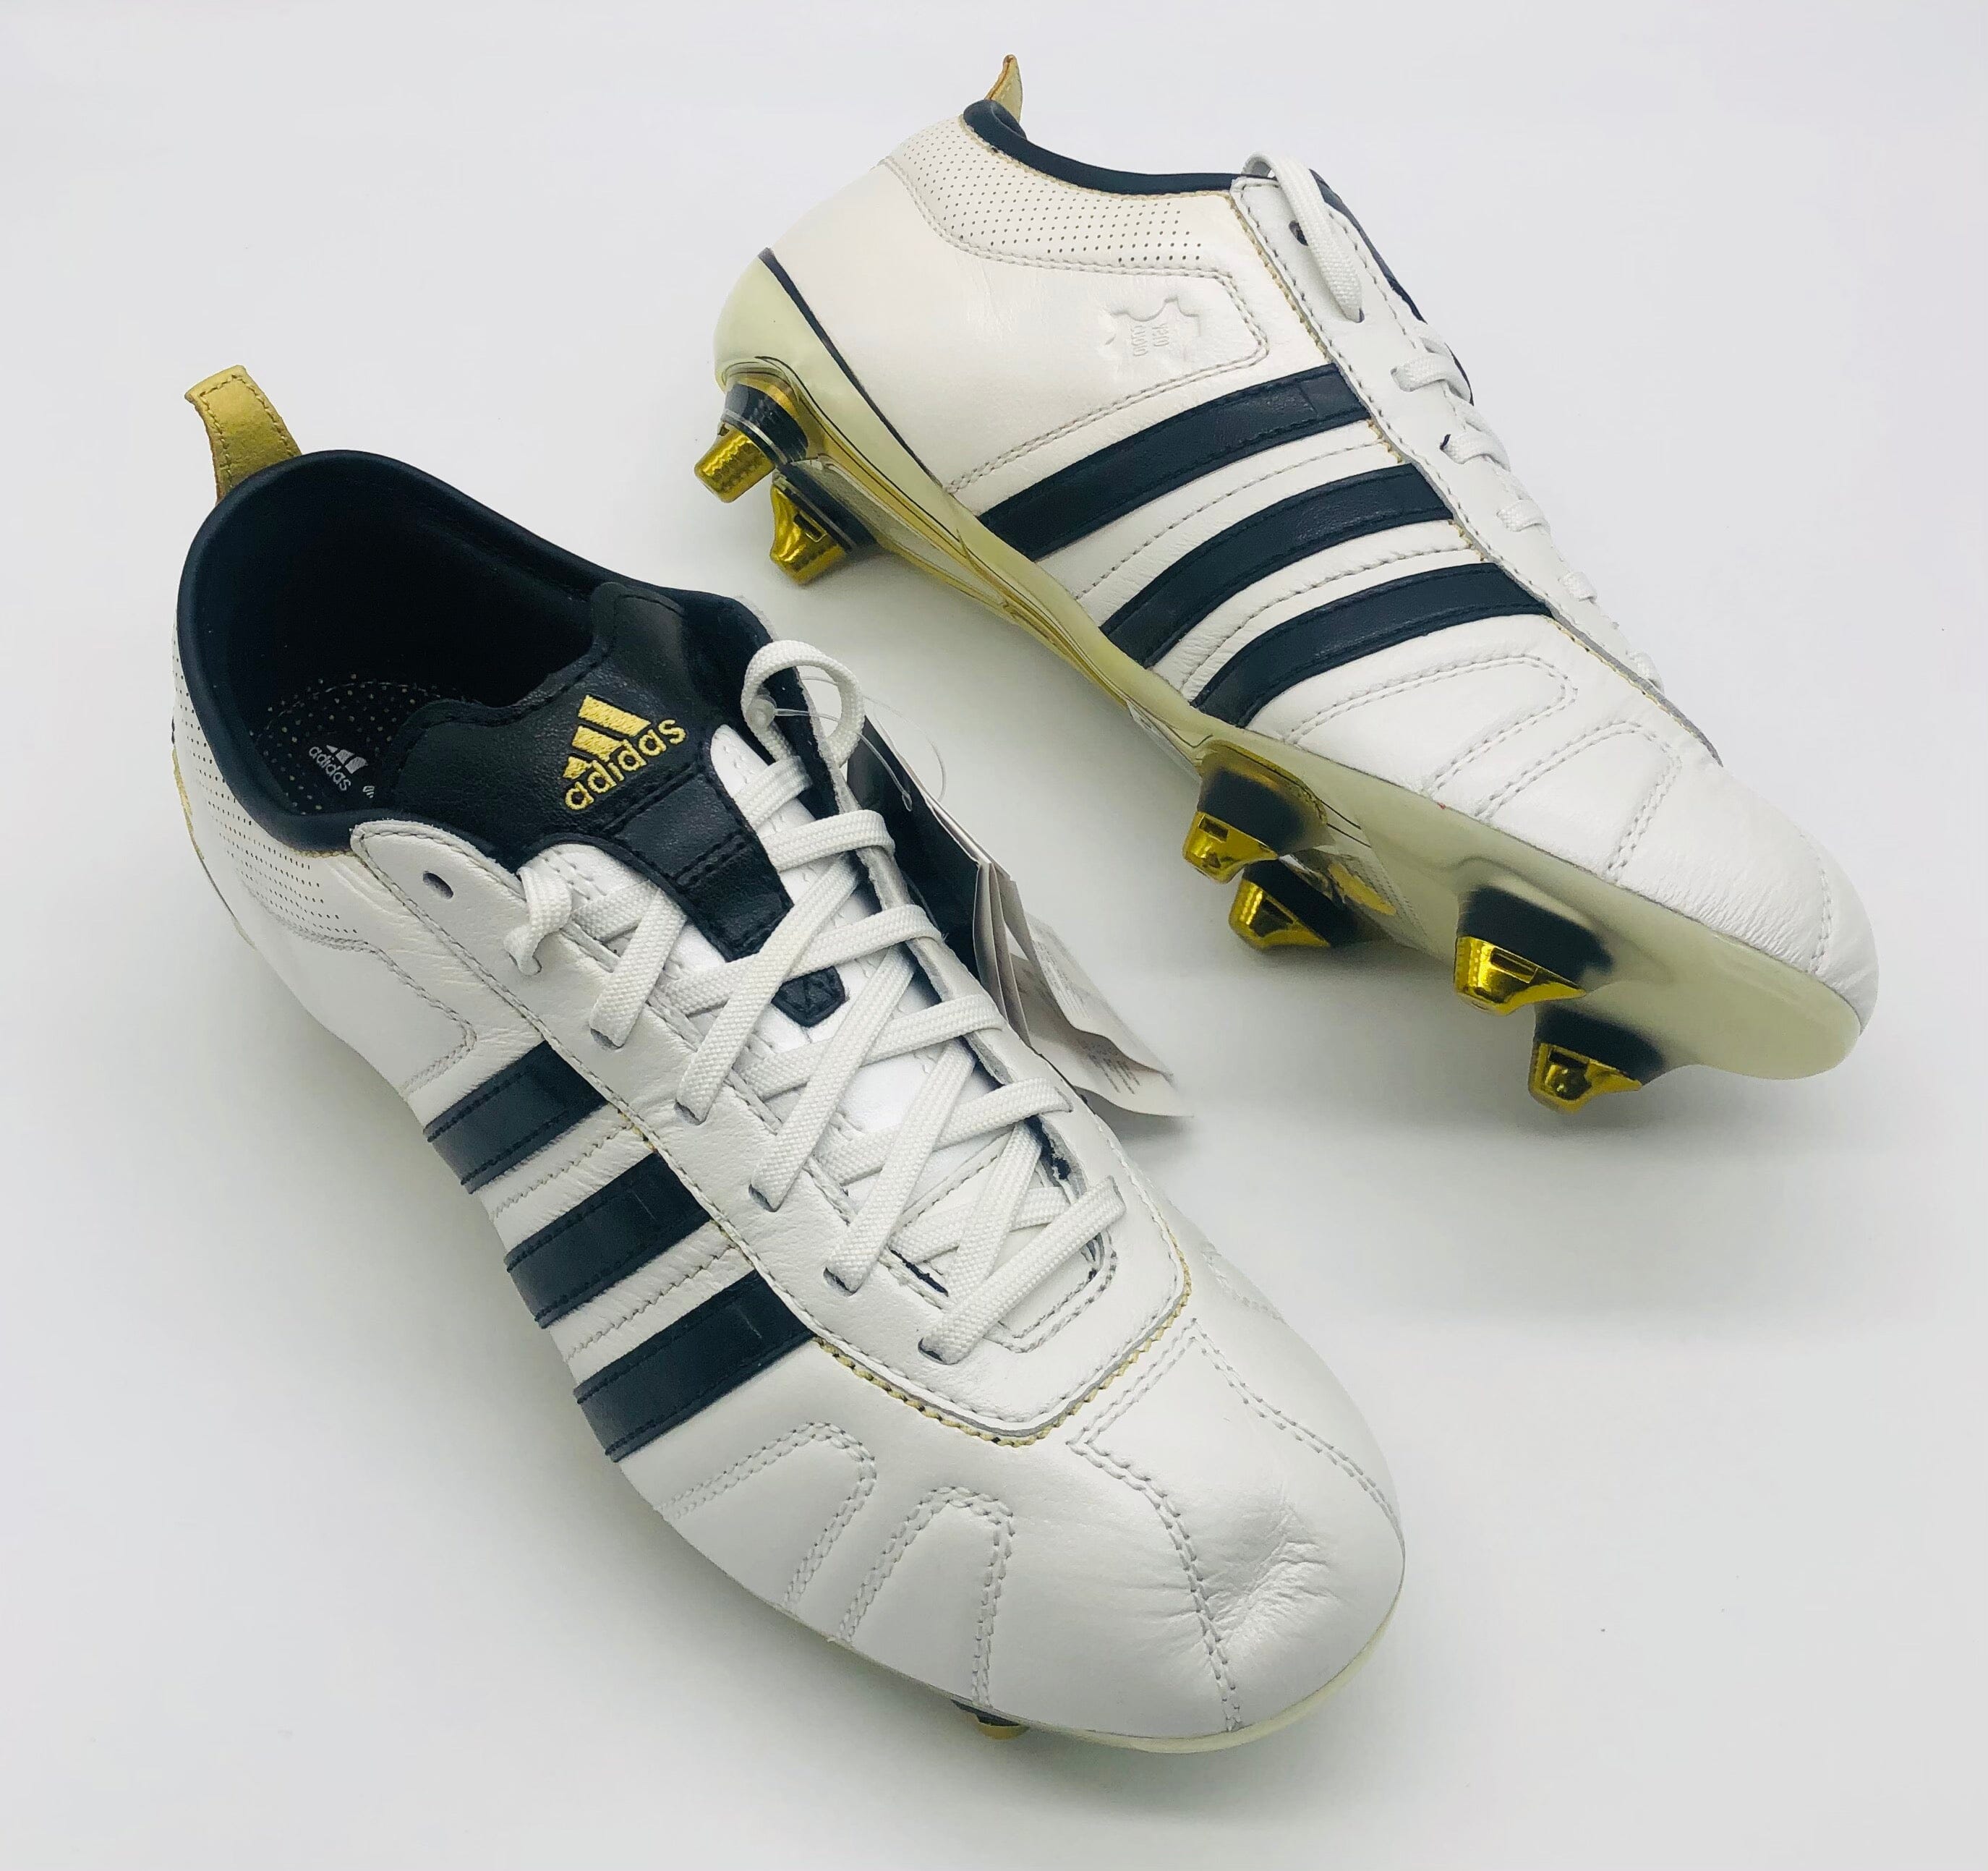 Nueve Auckland bostezando Adidas Adipure IV TRX SG – Classic Football Boots Ltd